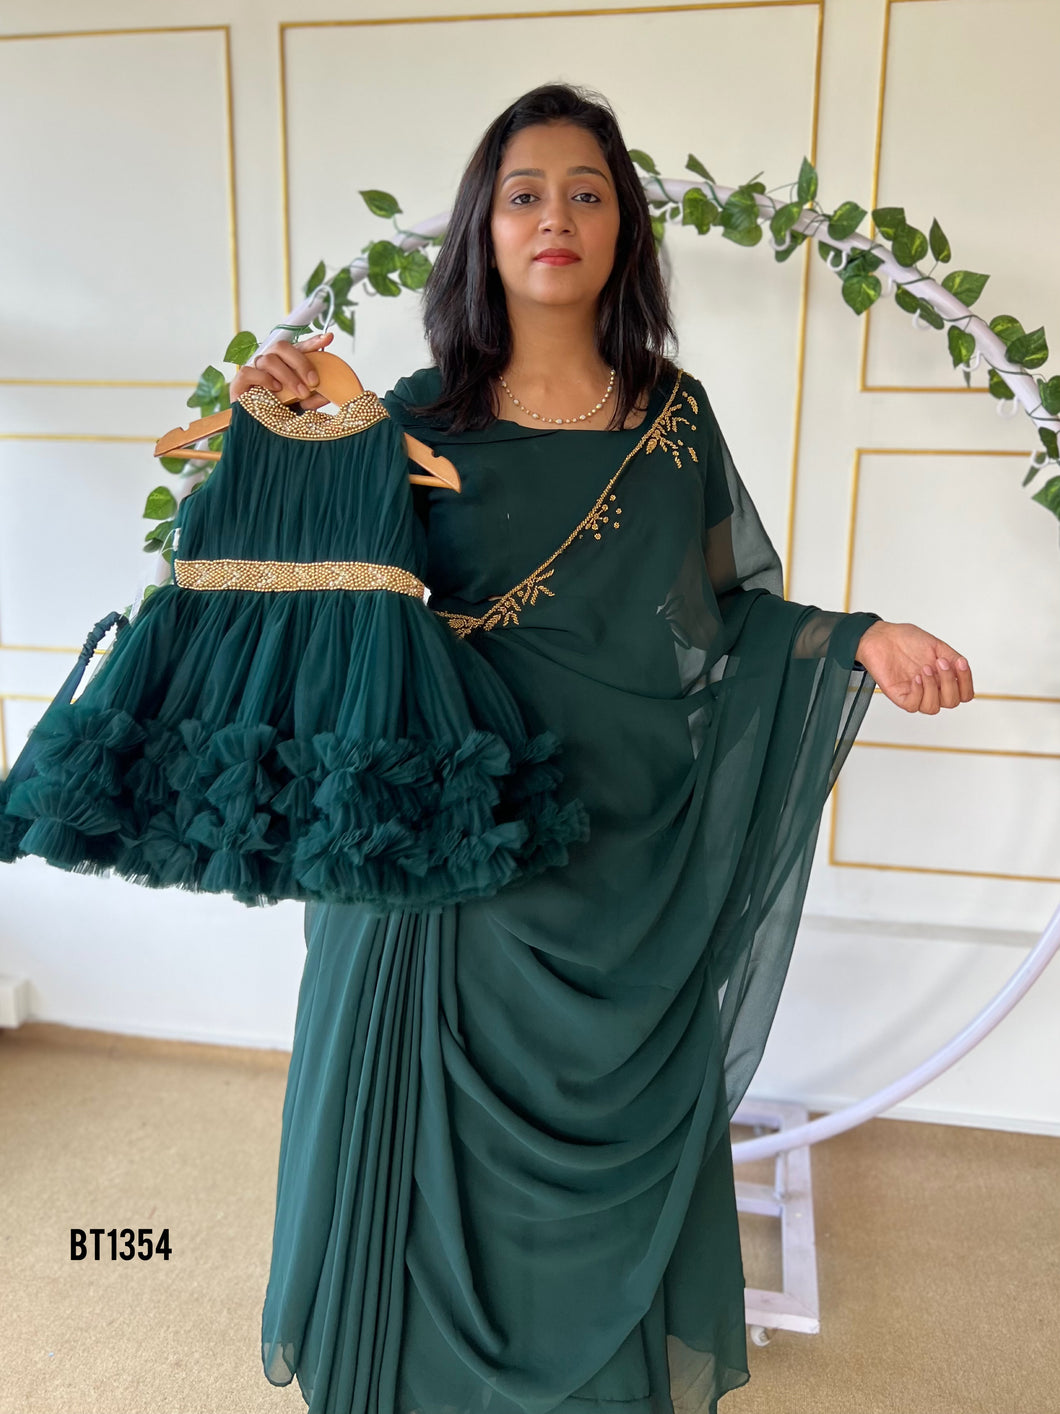 BT1354 Emerald Elegance: Chic Mother & Child Ensemble